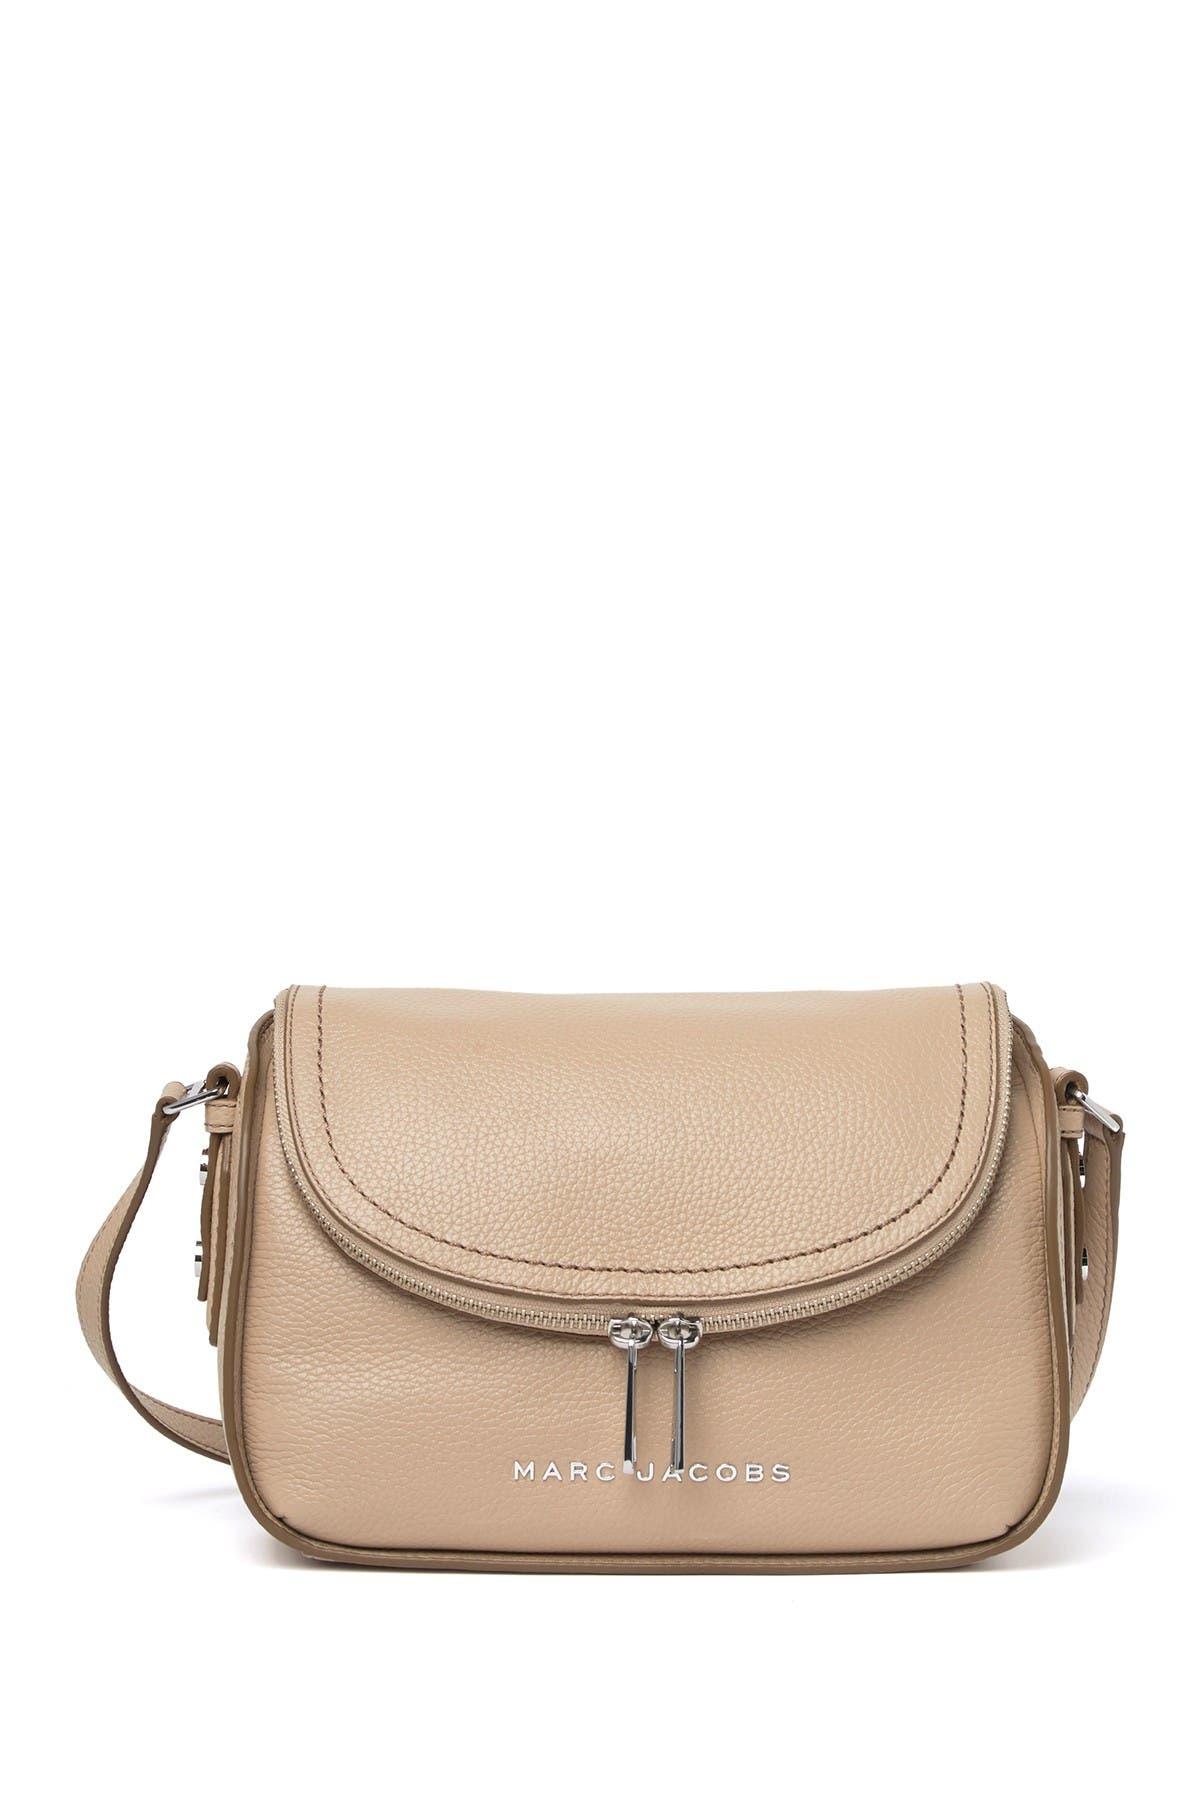 Marc Jacobs M0016931 Black/Gold Hardware Women's Grove Mini Crossbody Bag:  Handbags